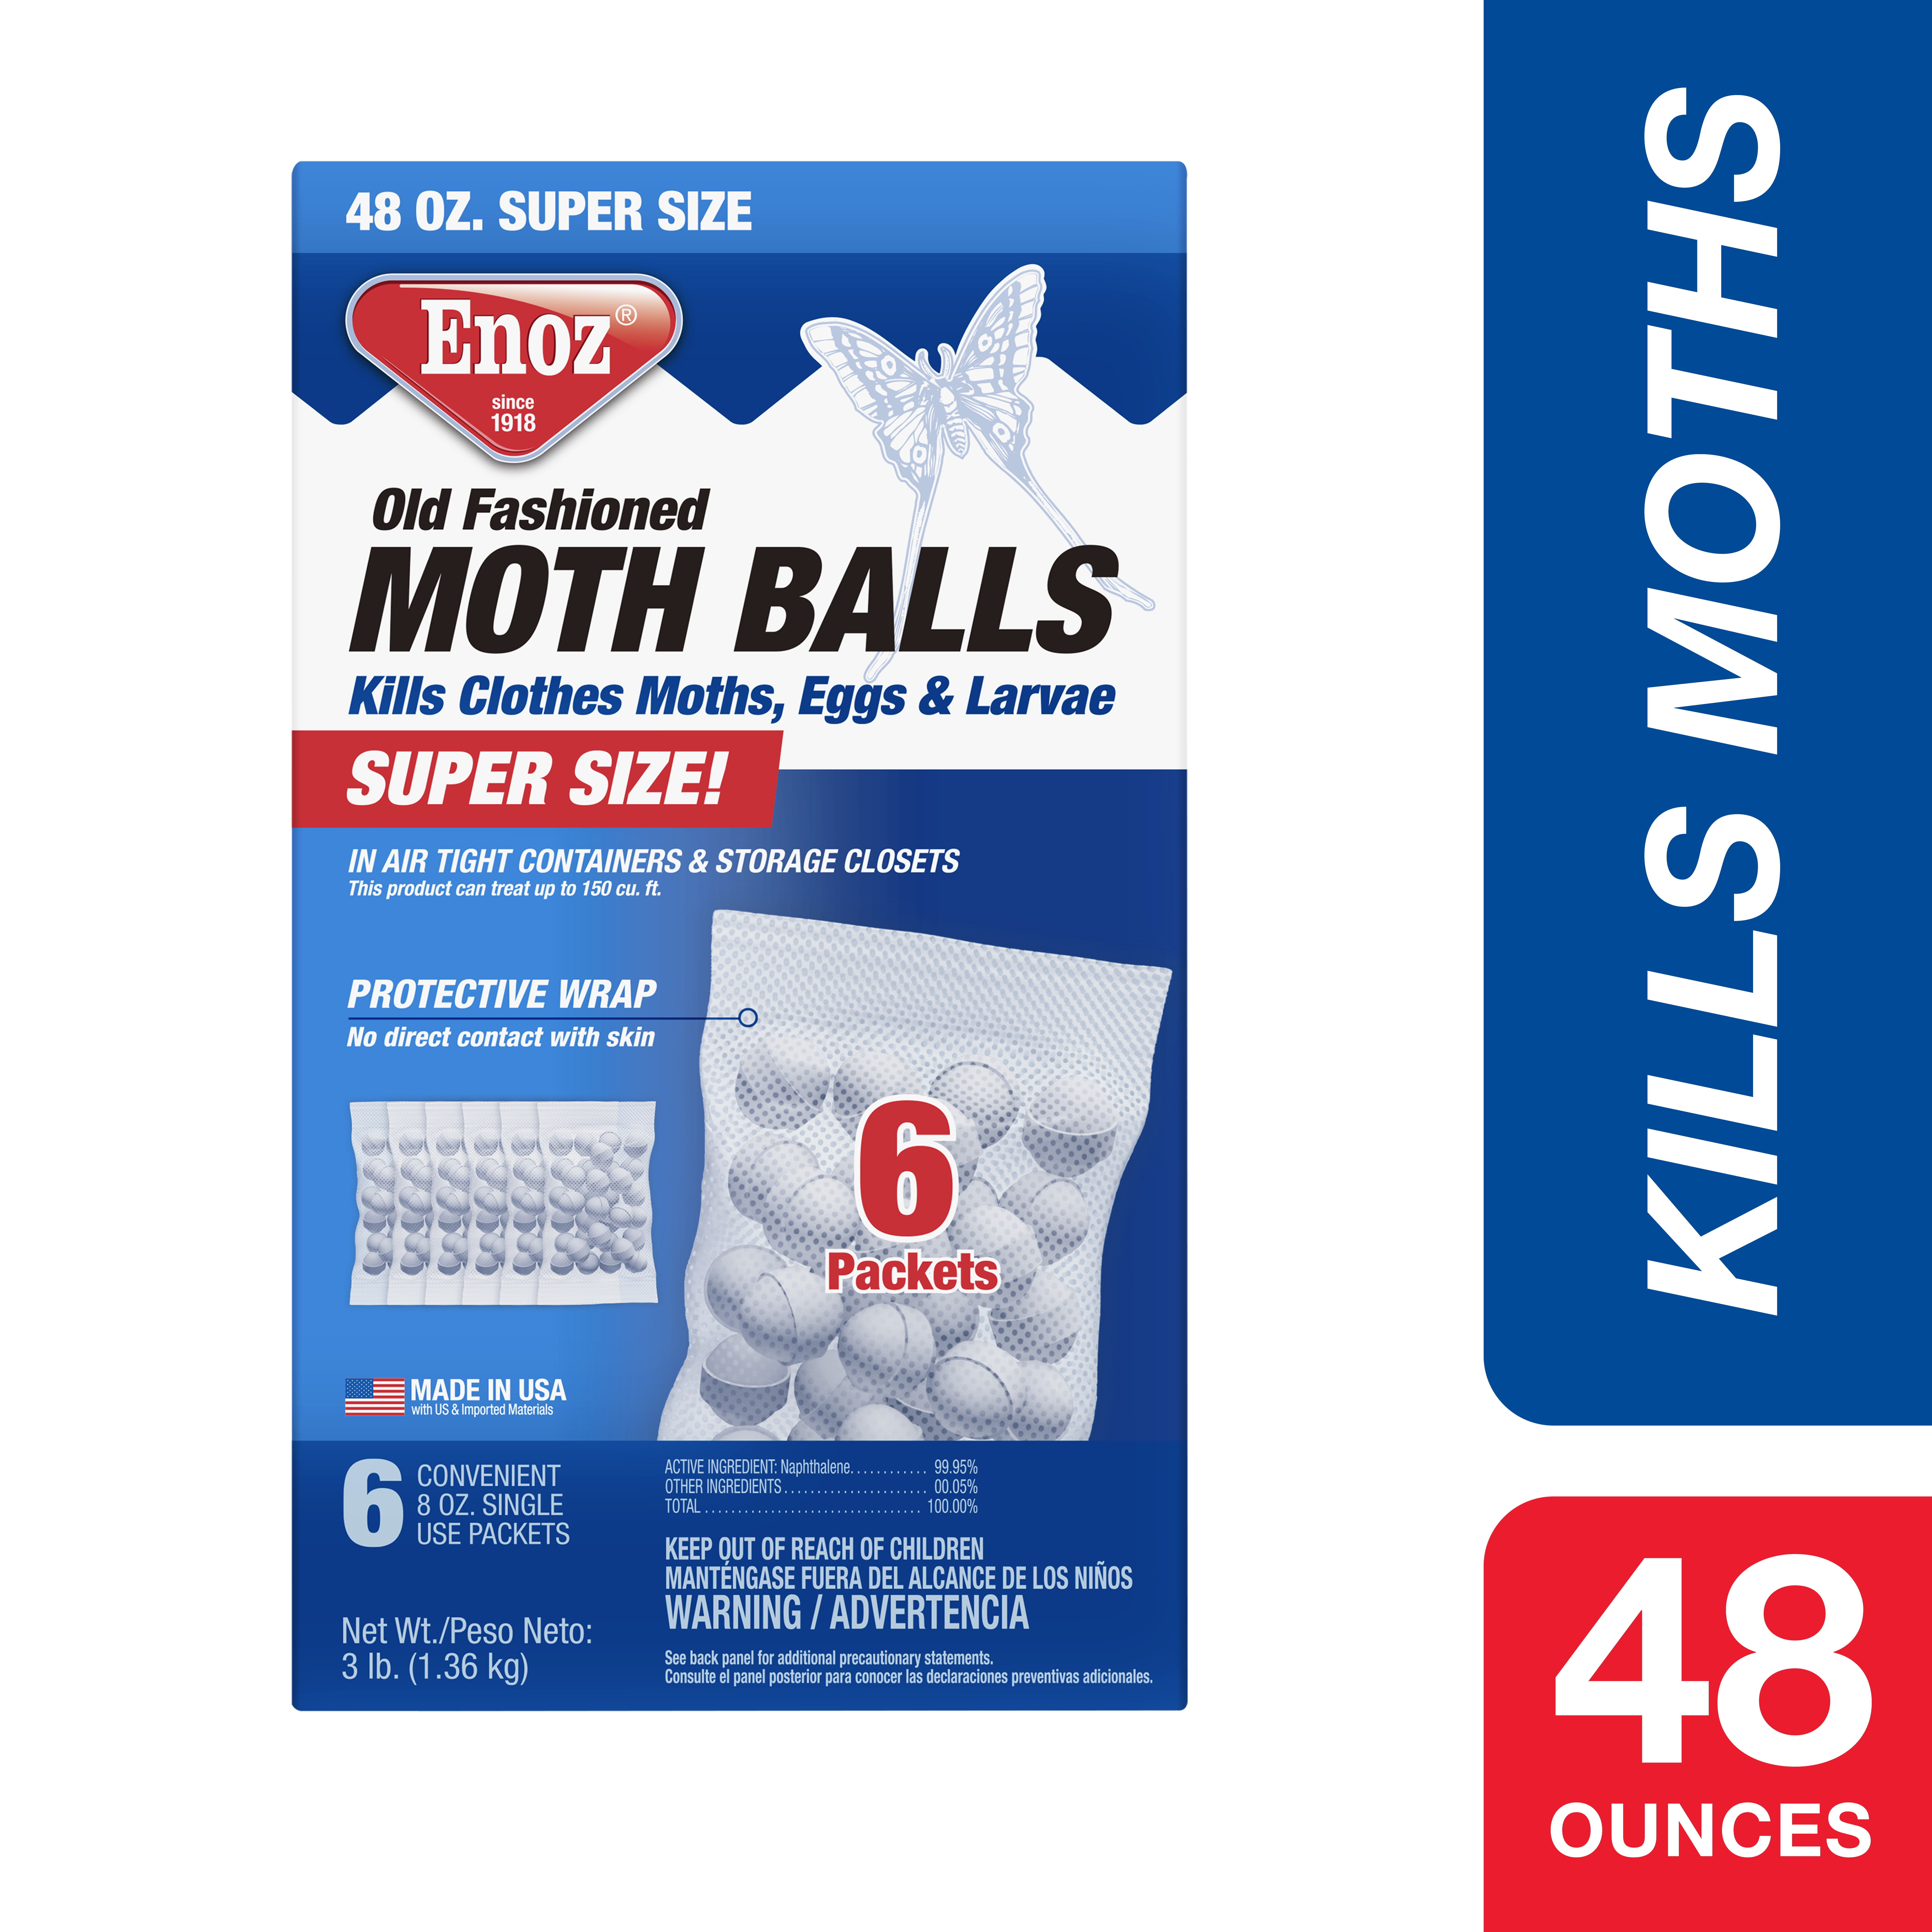 Authentic EAGLE Naphthelene Balls Refined Pure Moth Ball Mothballs Closet Toilet 